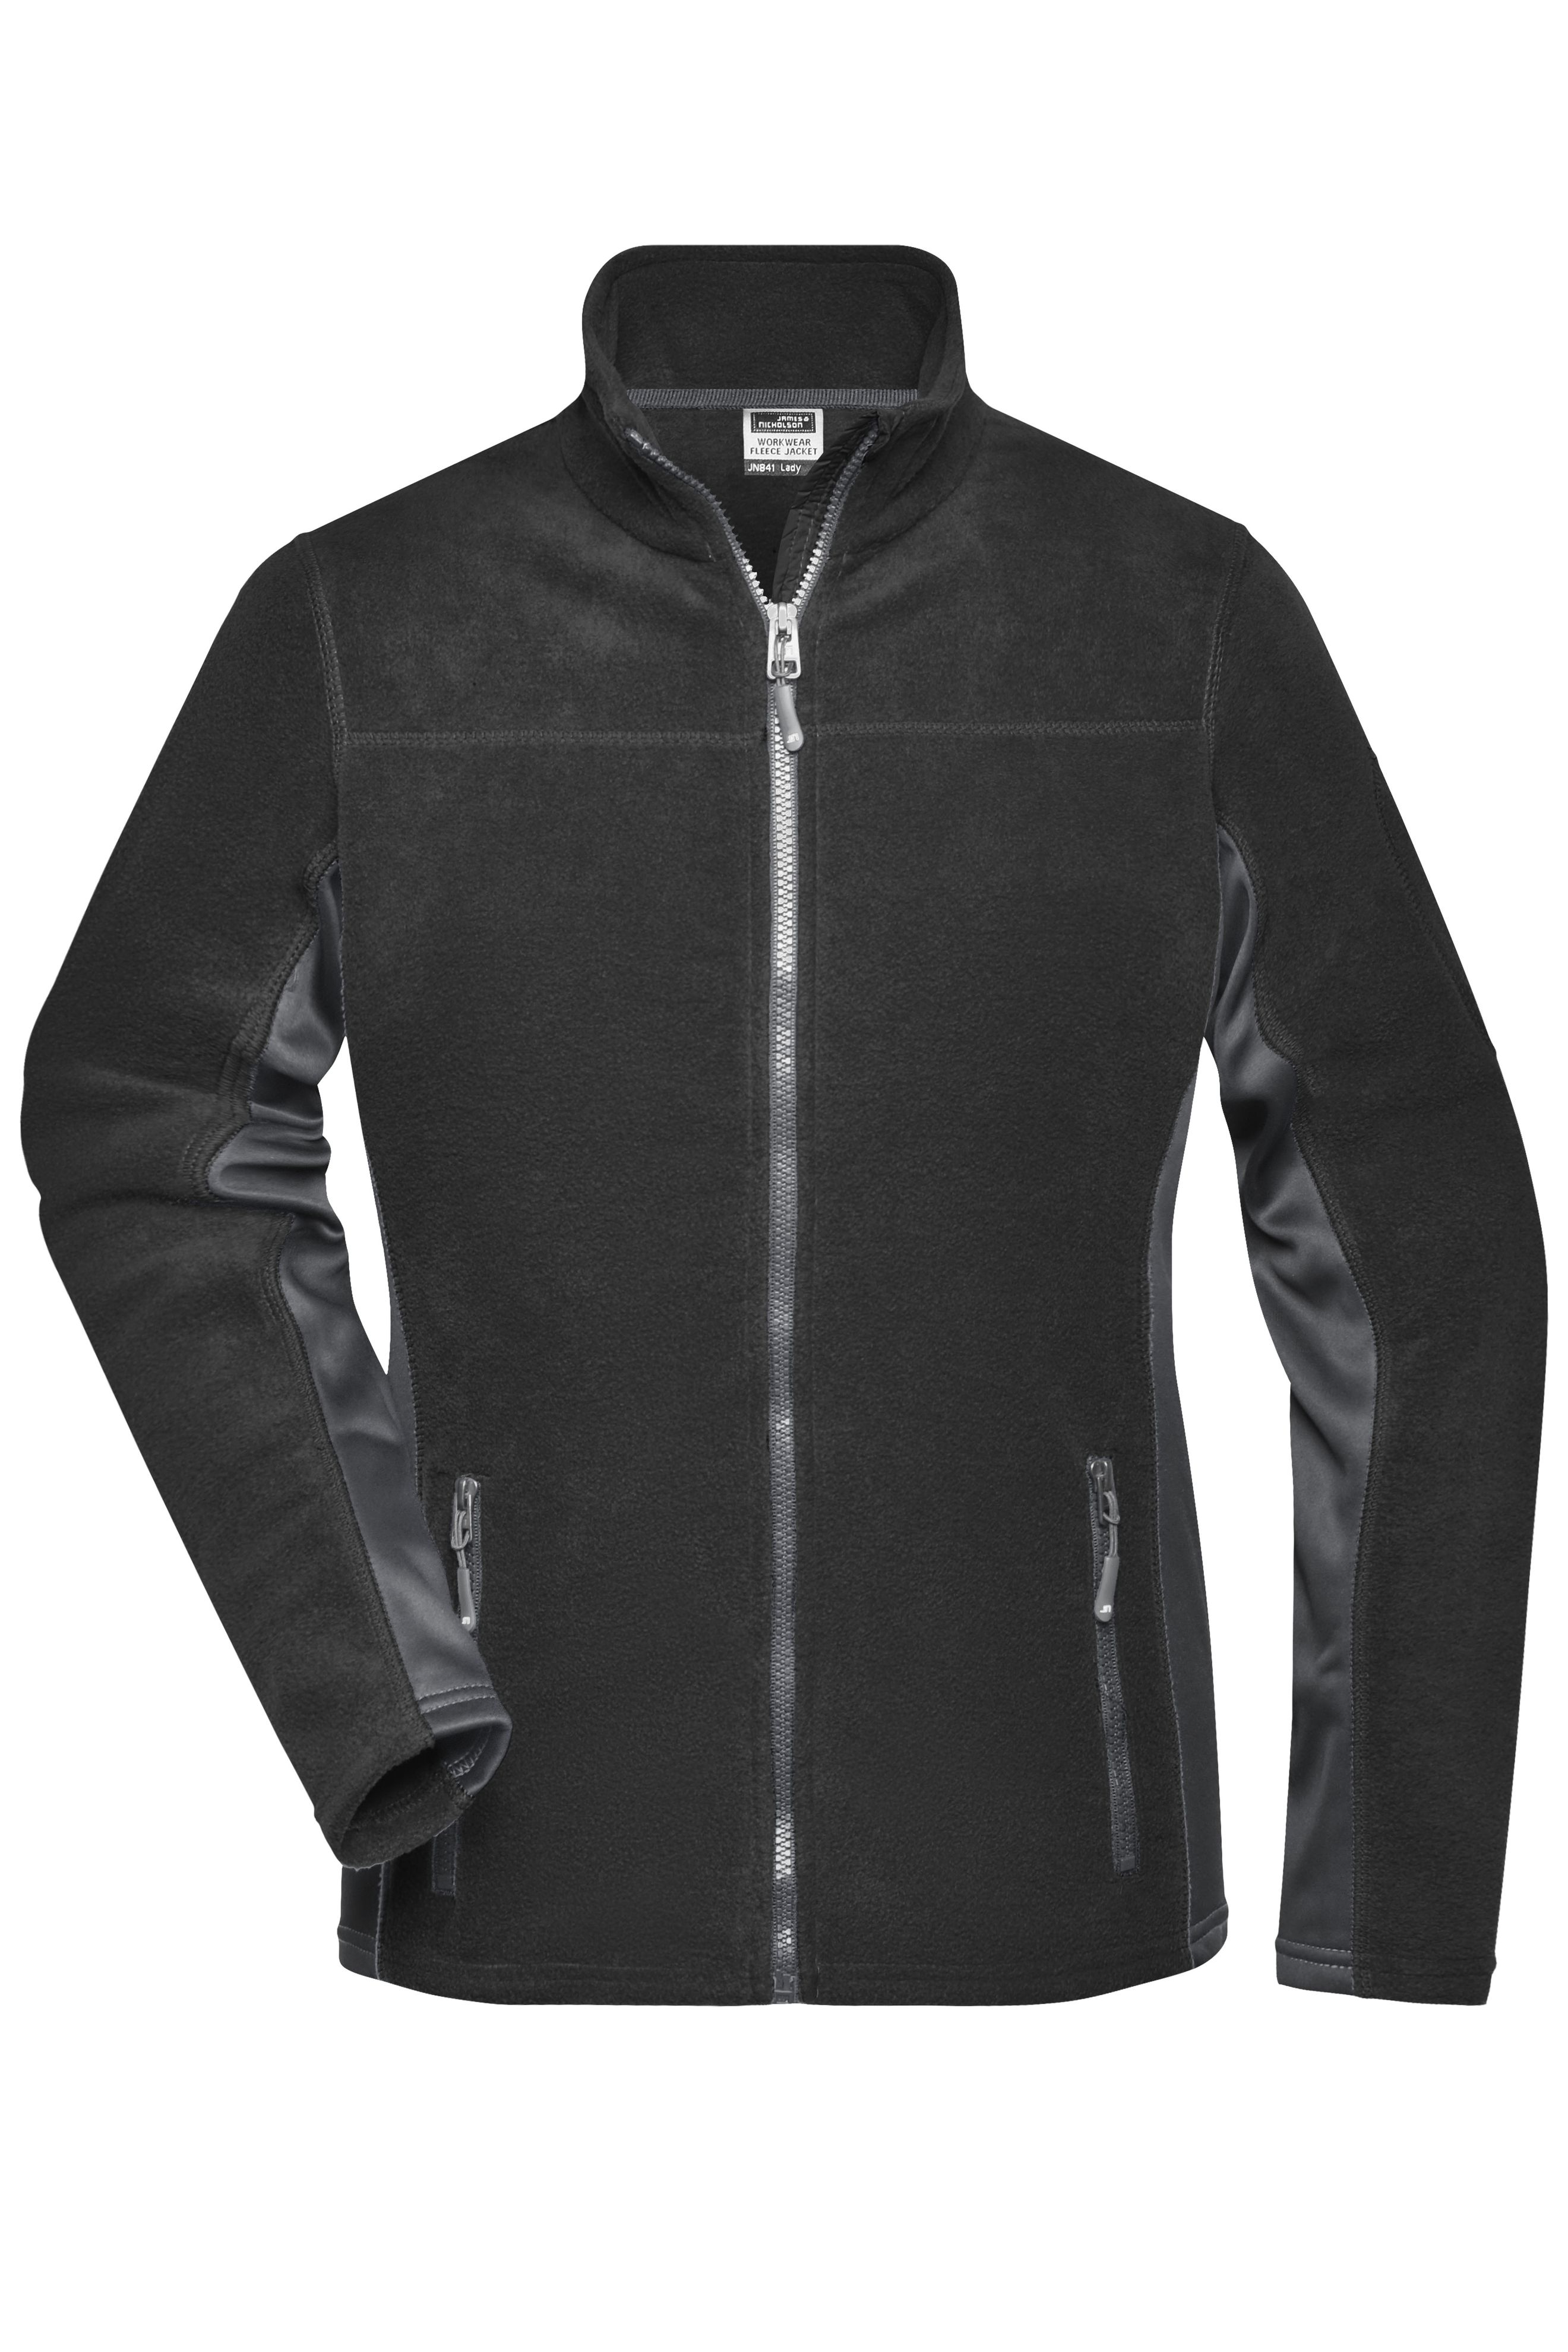 Ladies Ladies' Workwear Fleece Jacket - STRONG - Black/carbon ...